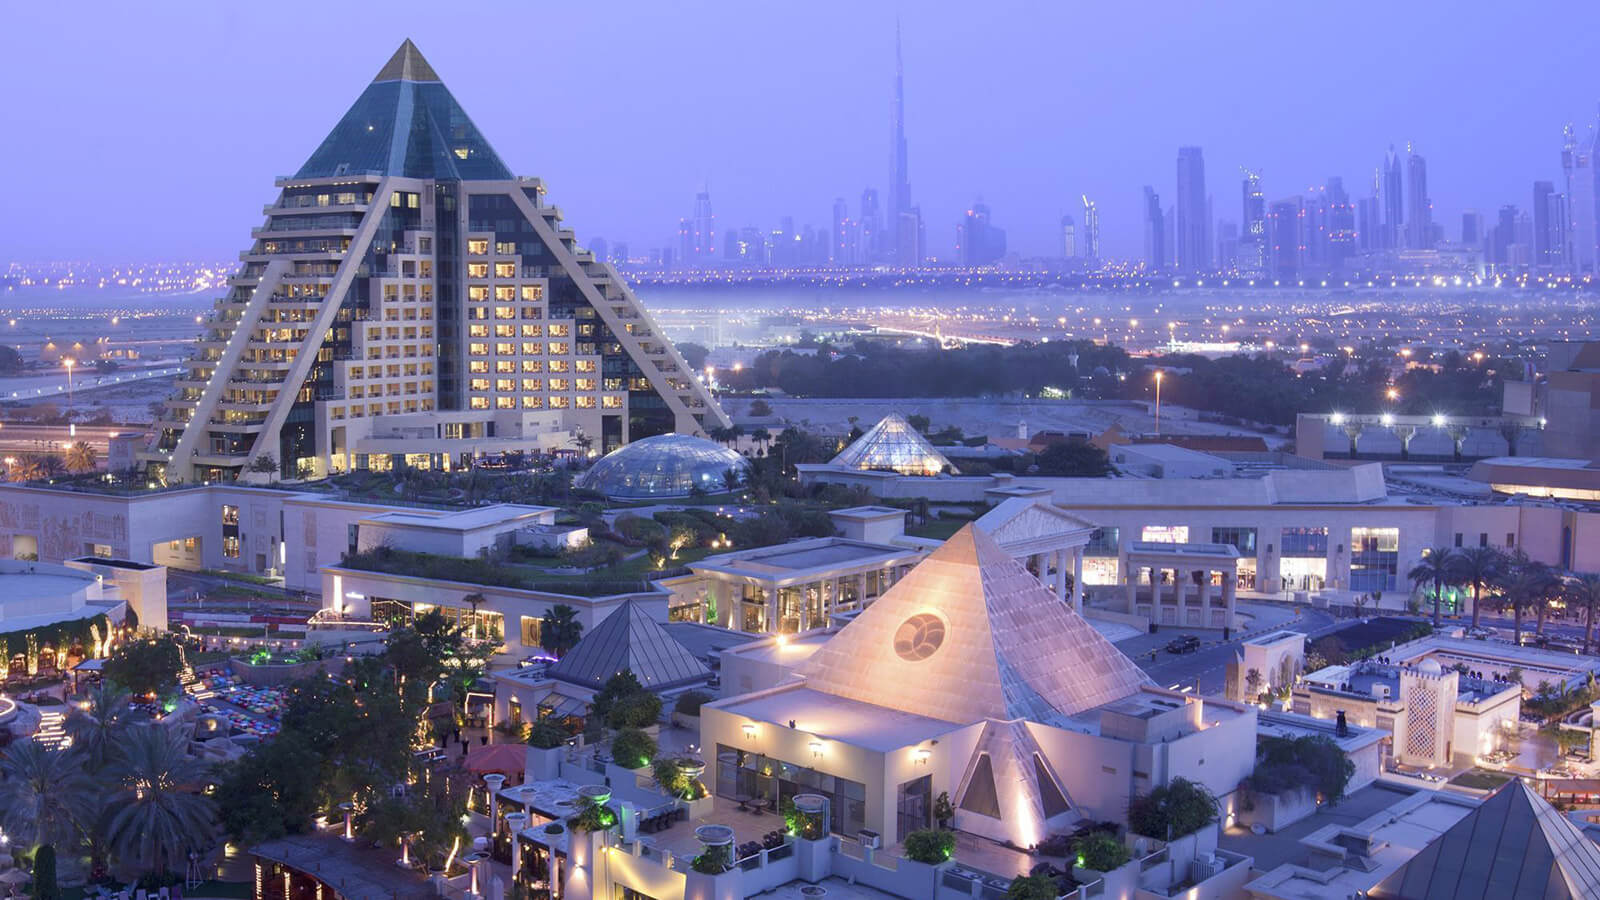 Luxury Hotel Review: Raffles Hotel, Dubai, UAE